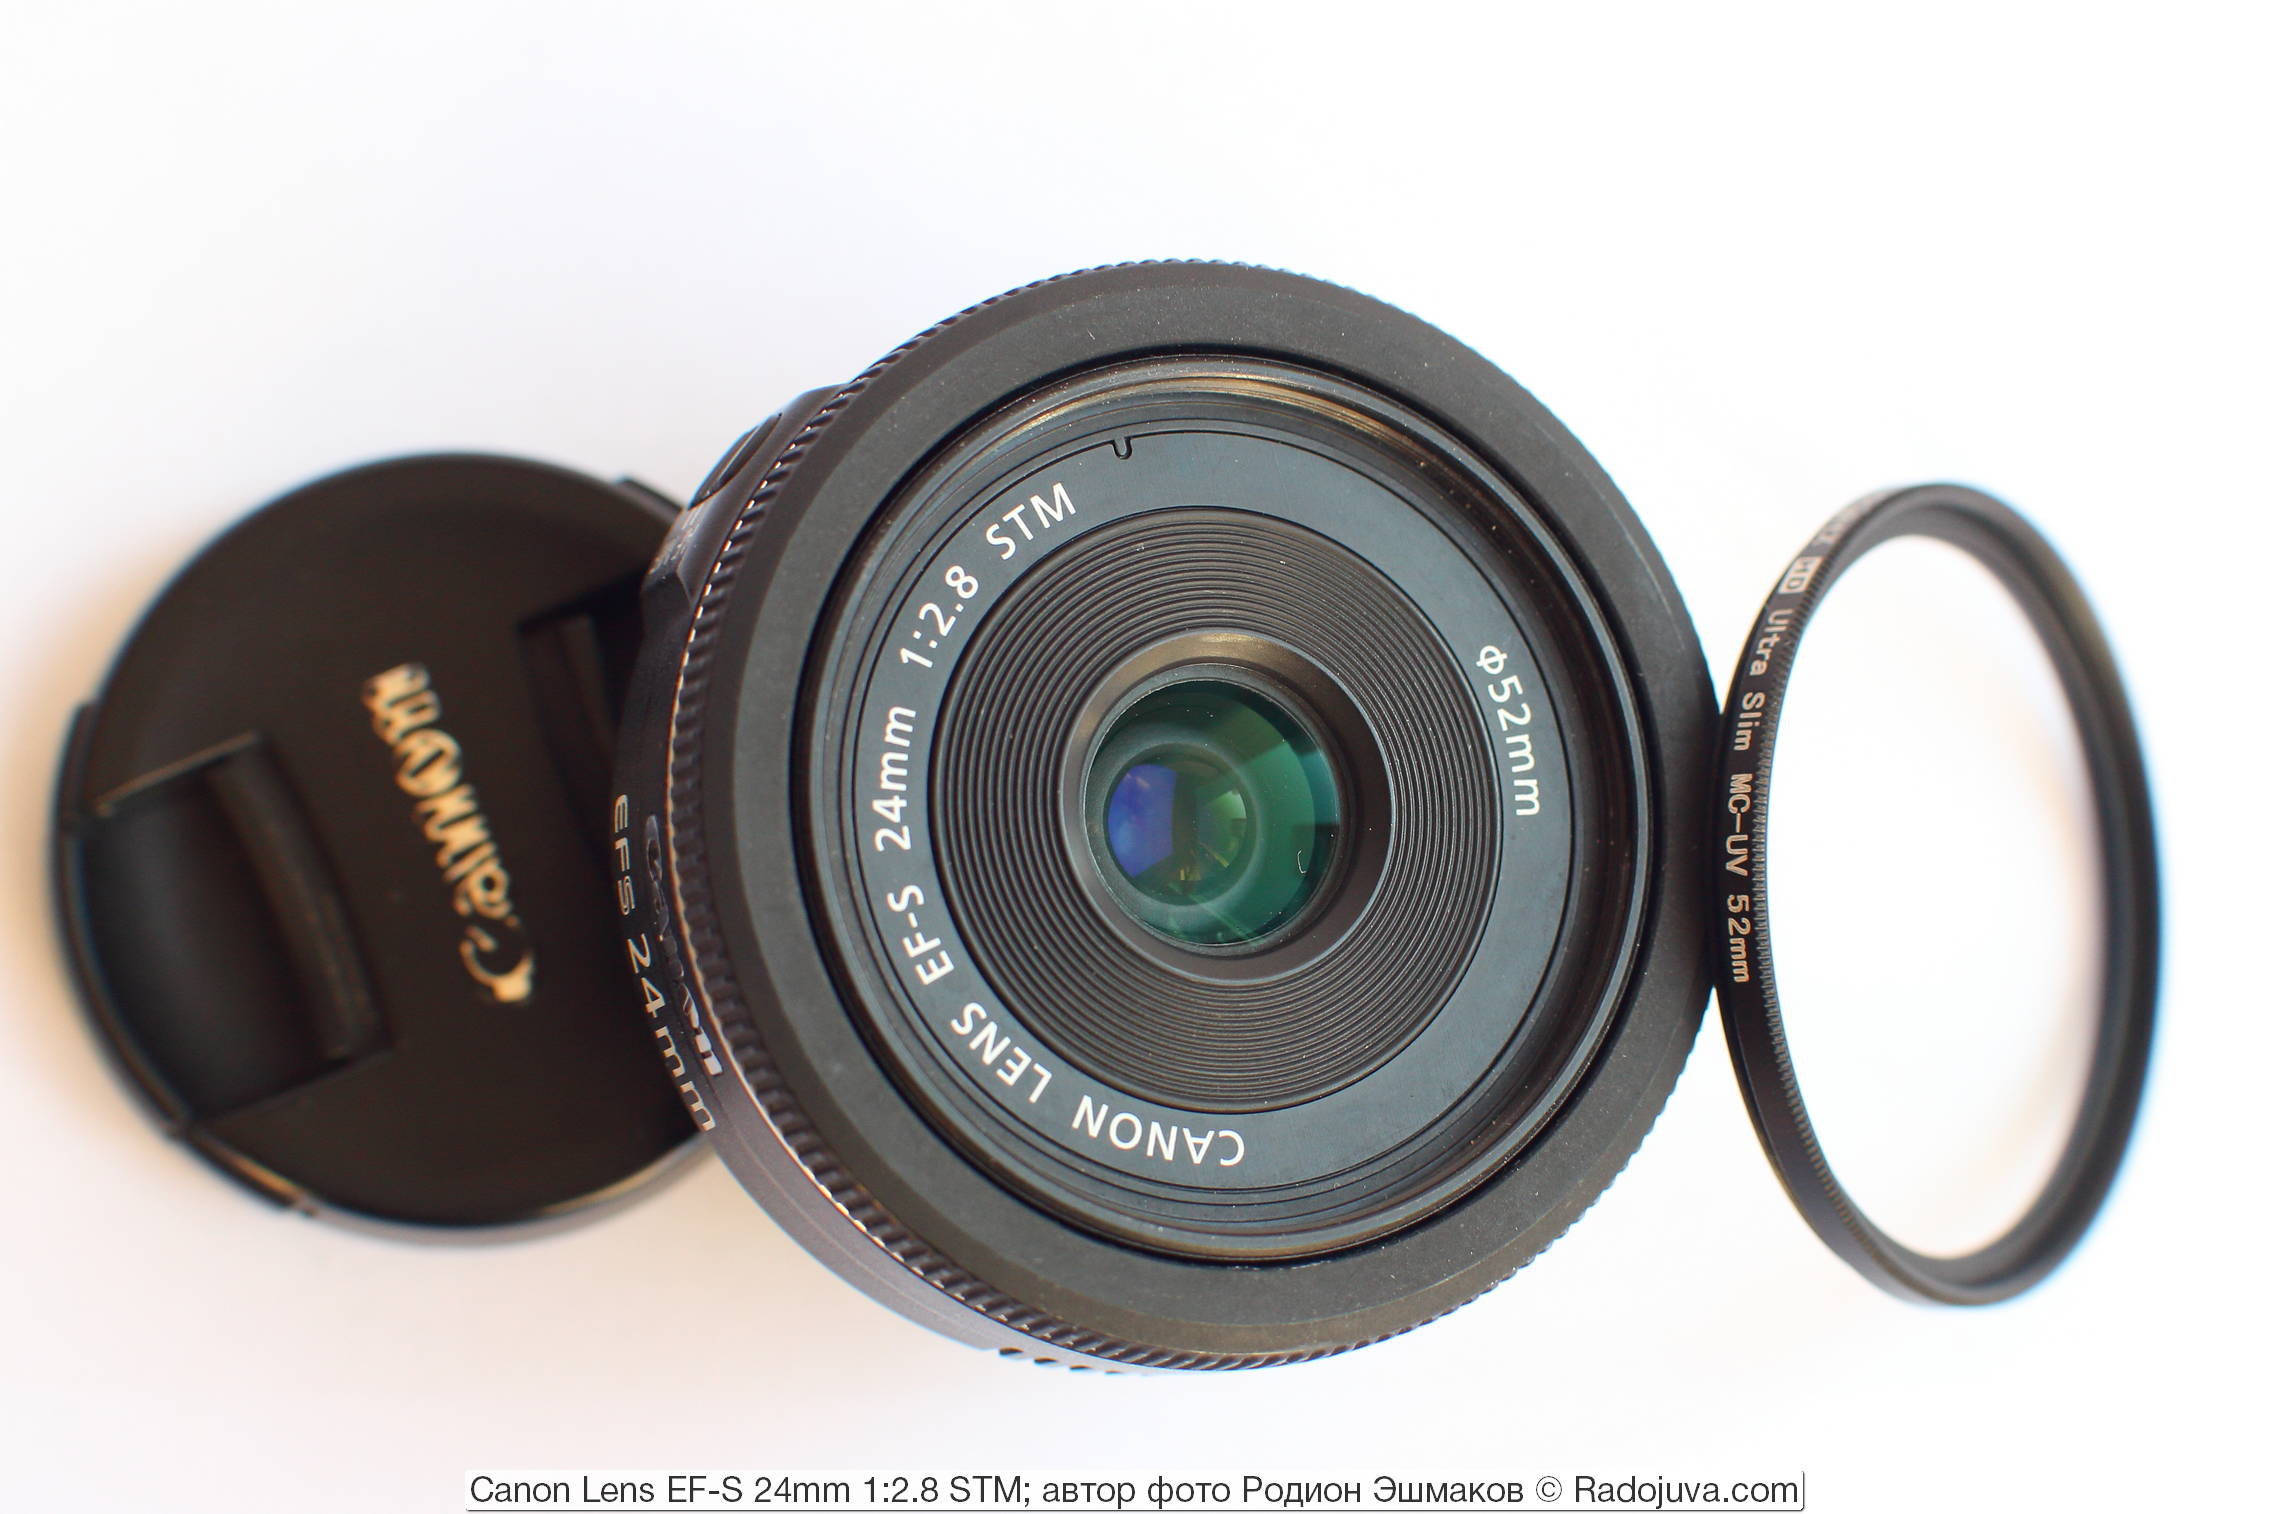 Canon Lens EF-S 24mm 1:2.8 STM